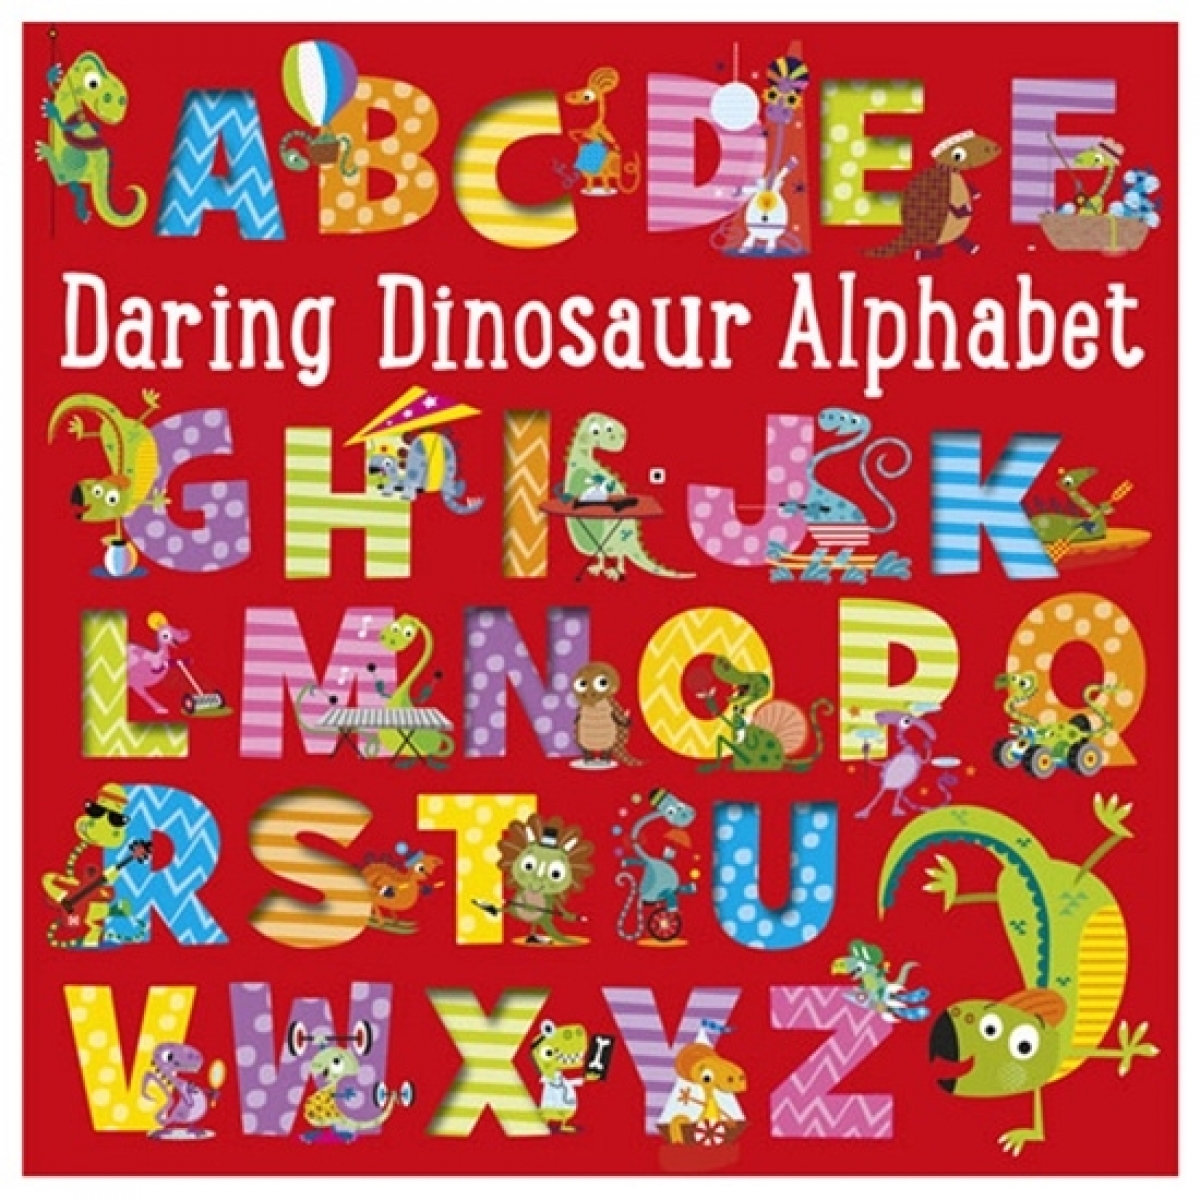 Lynch Stuart Daring Dinosaur Alphabet 